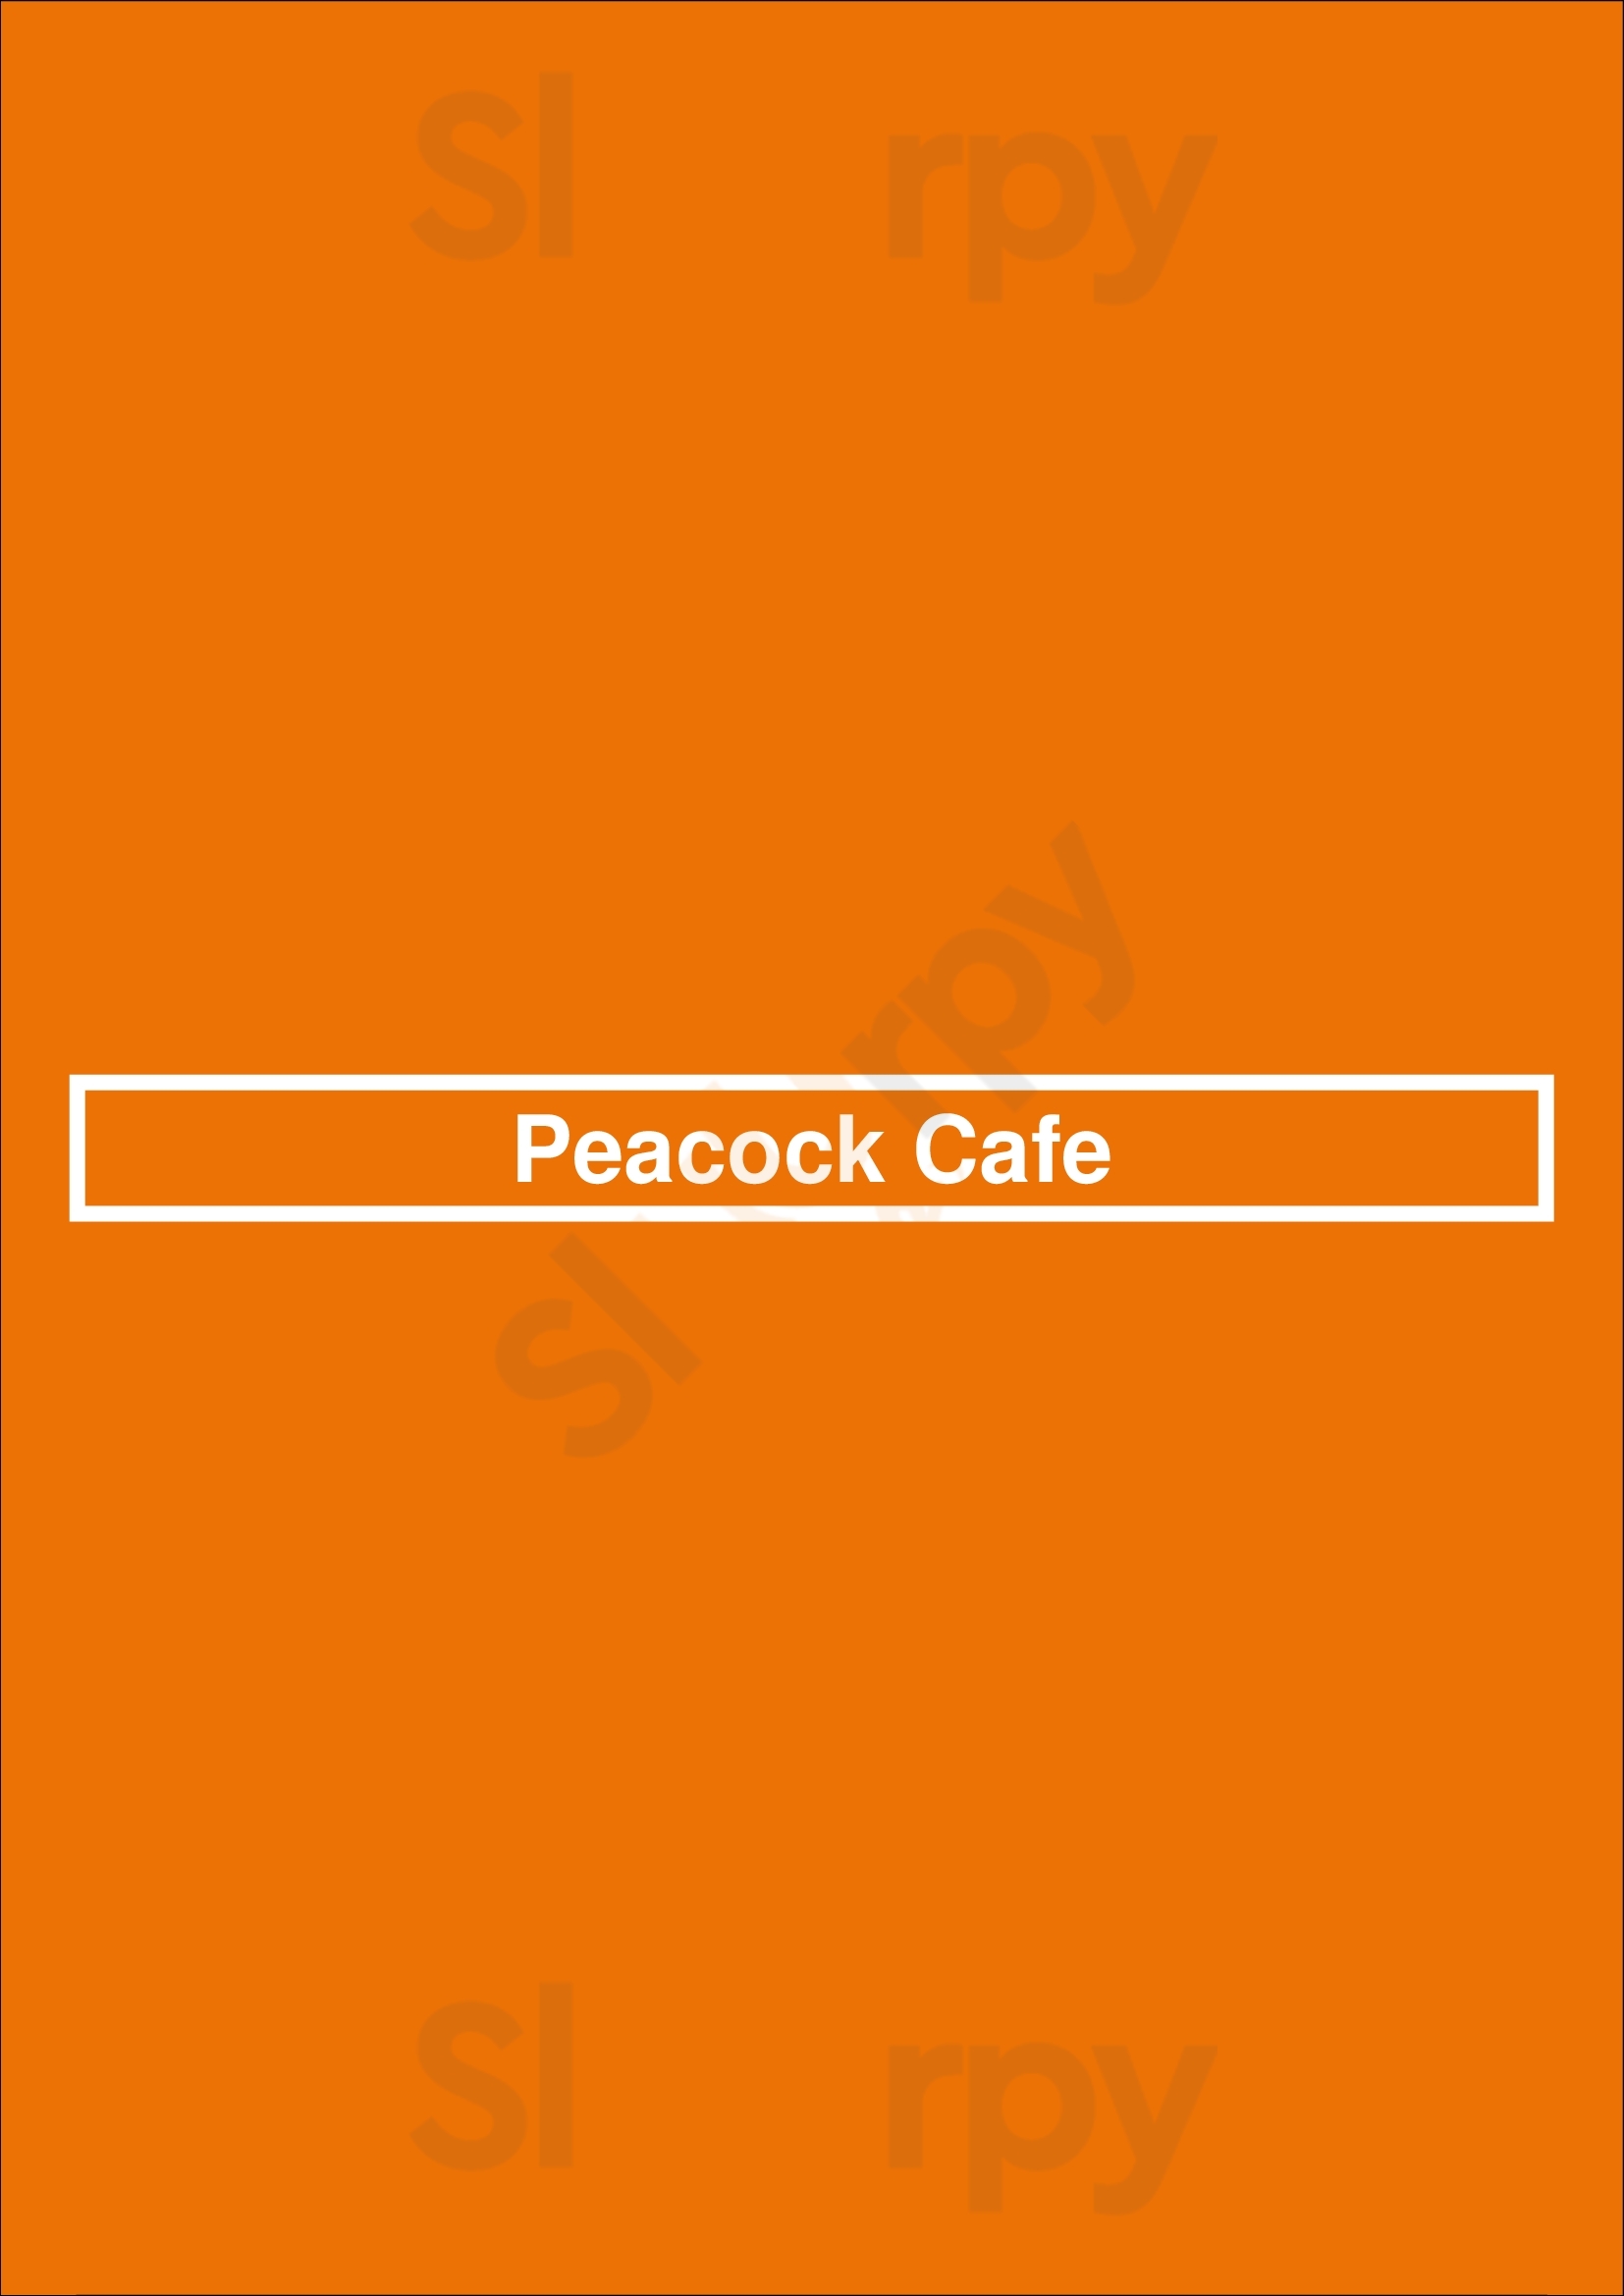 Peacock Cafe Washington DC Menu - 1